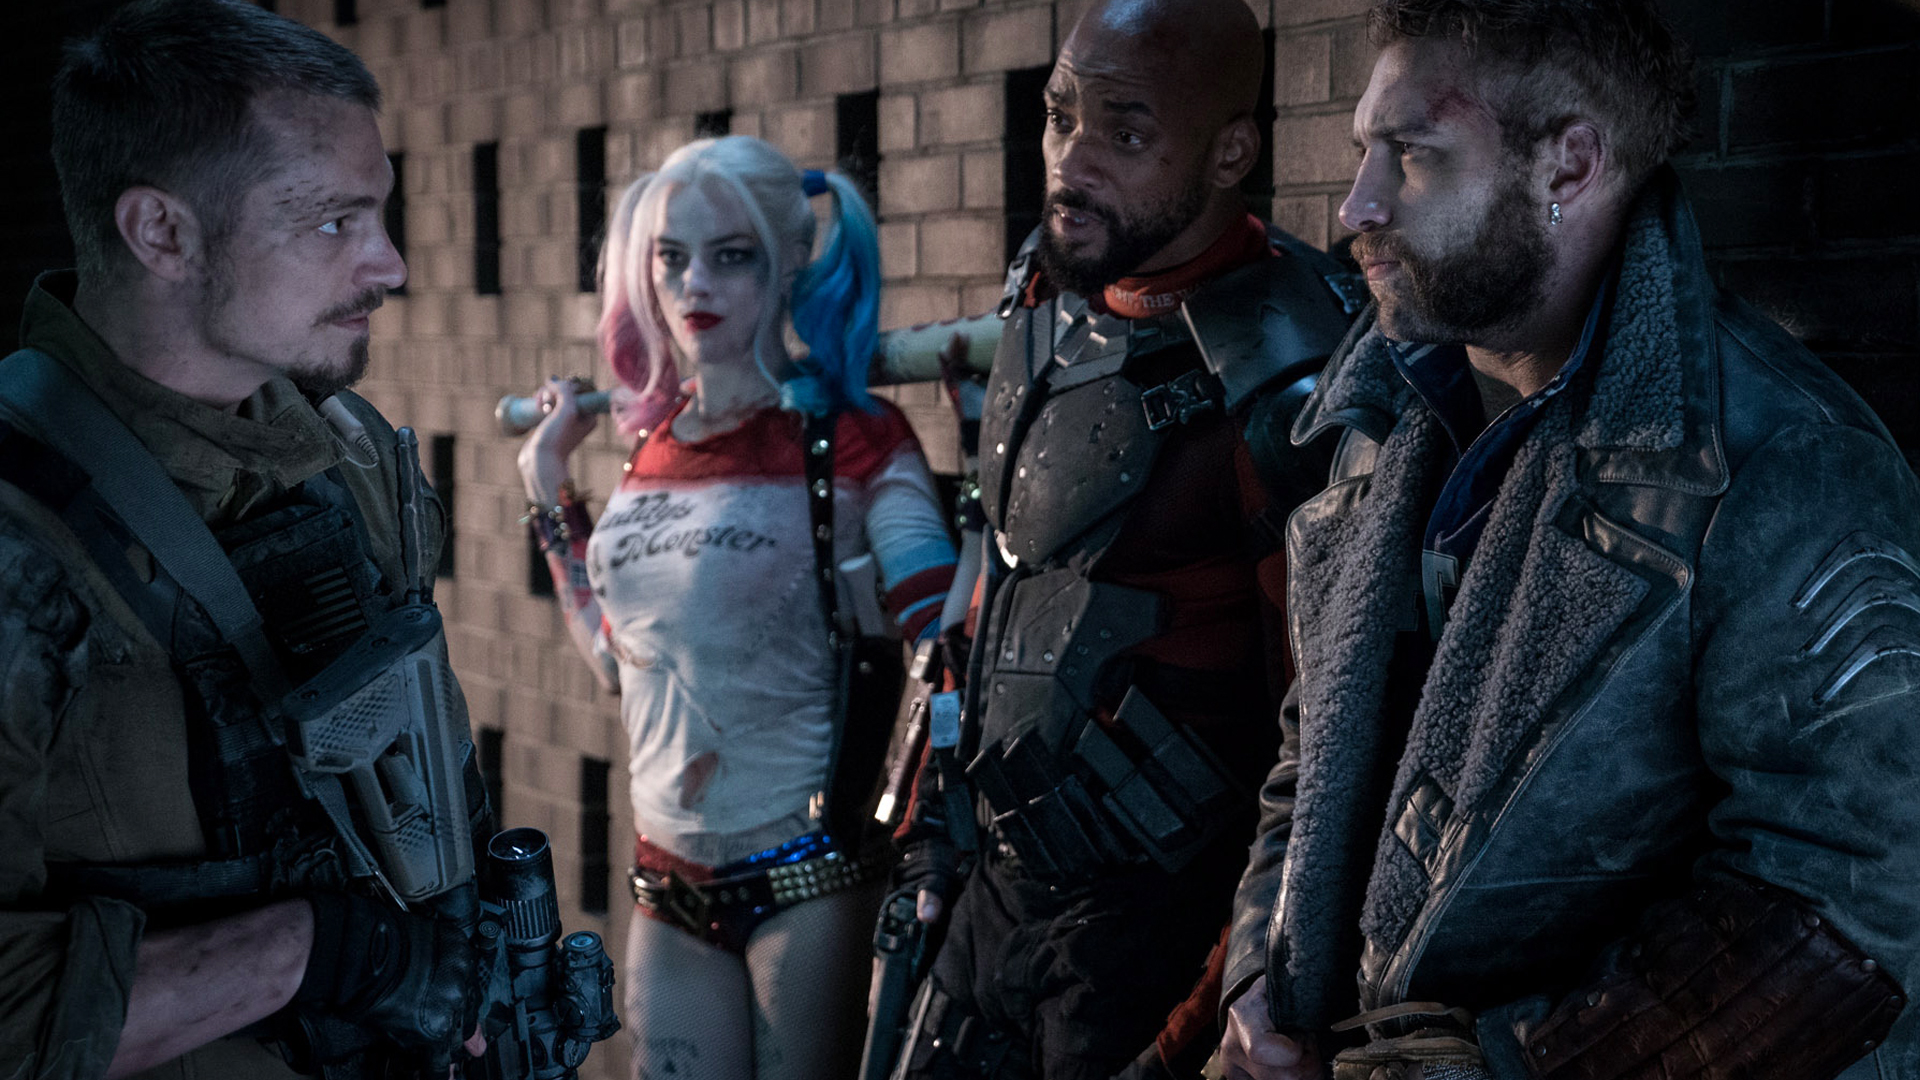 Suicide Squad Cast Respond to Negative Critic Reviews